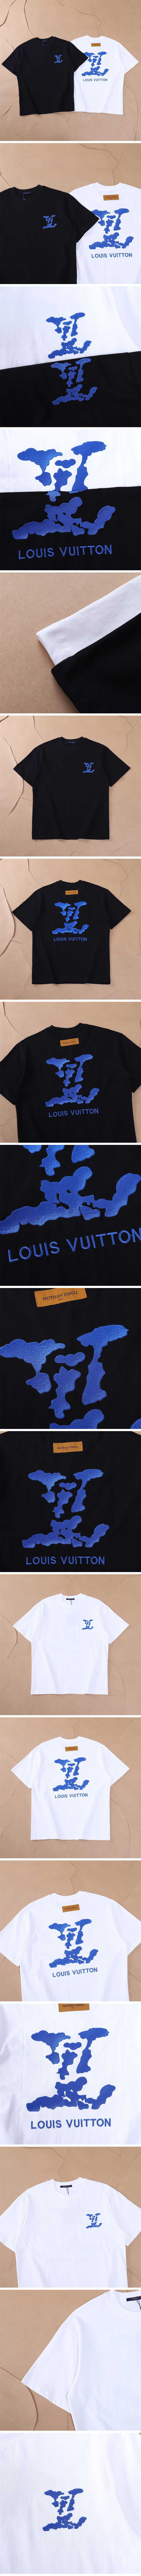 Louis Vuitton 23 Lv Logo Tee ルイヴィトン 23 Lv ロゴ Tシャツ